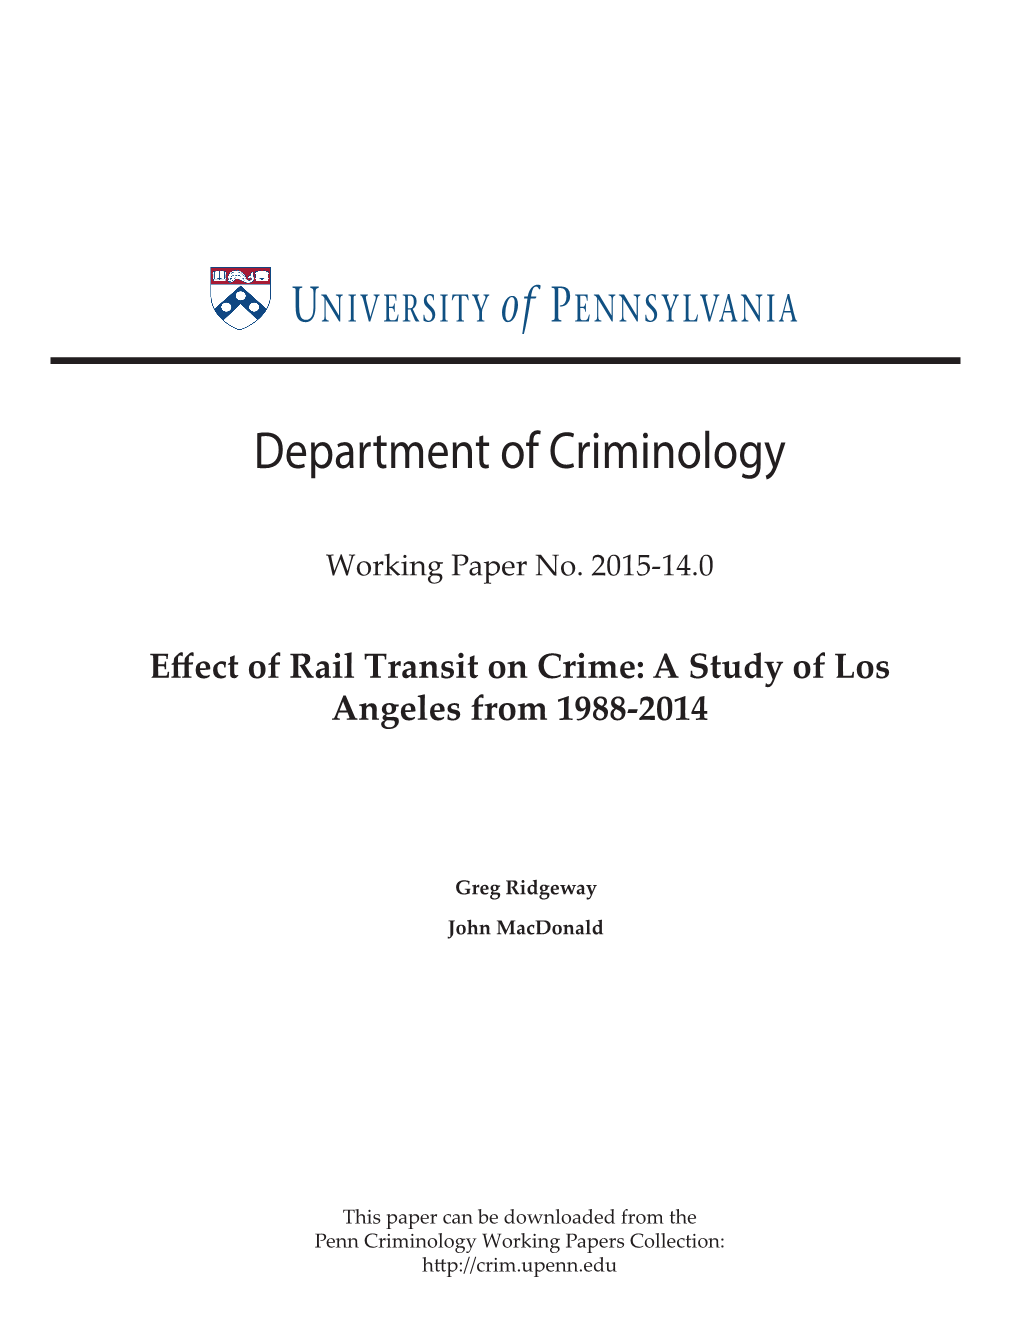 Effect of Rail Transit on Crime: a Study of Los Angeles from 1988-2014 Greg Ridgeway John M